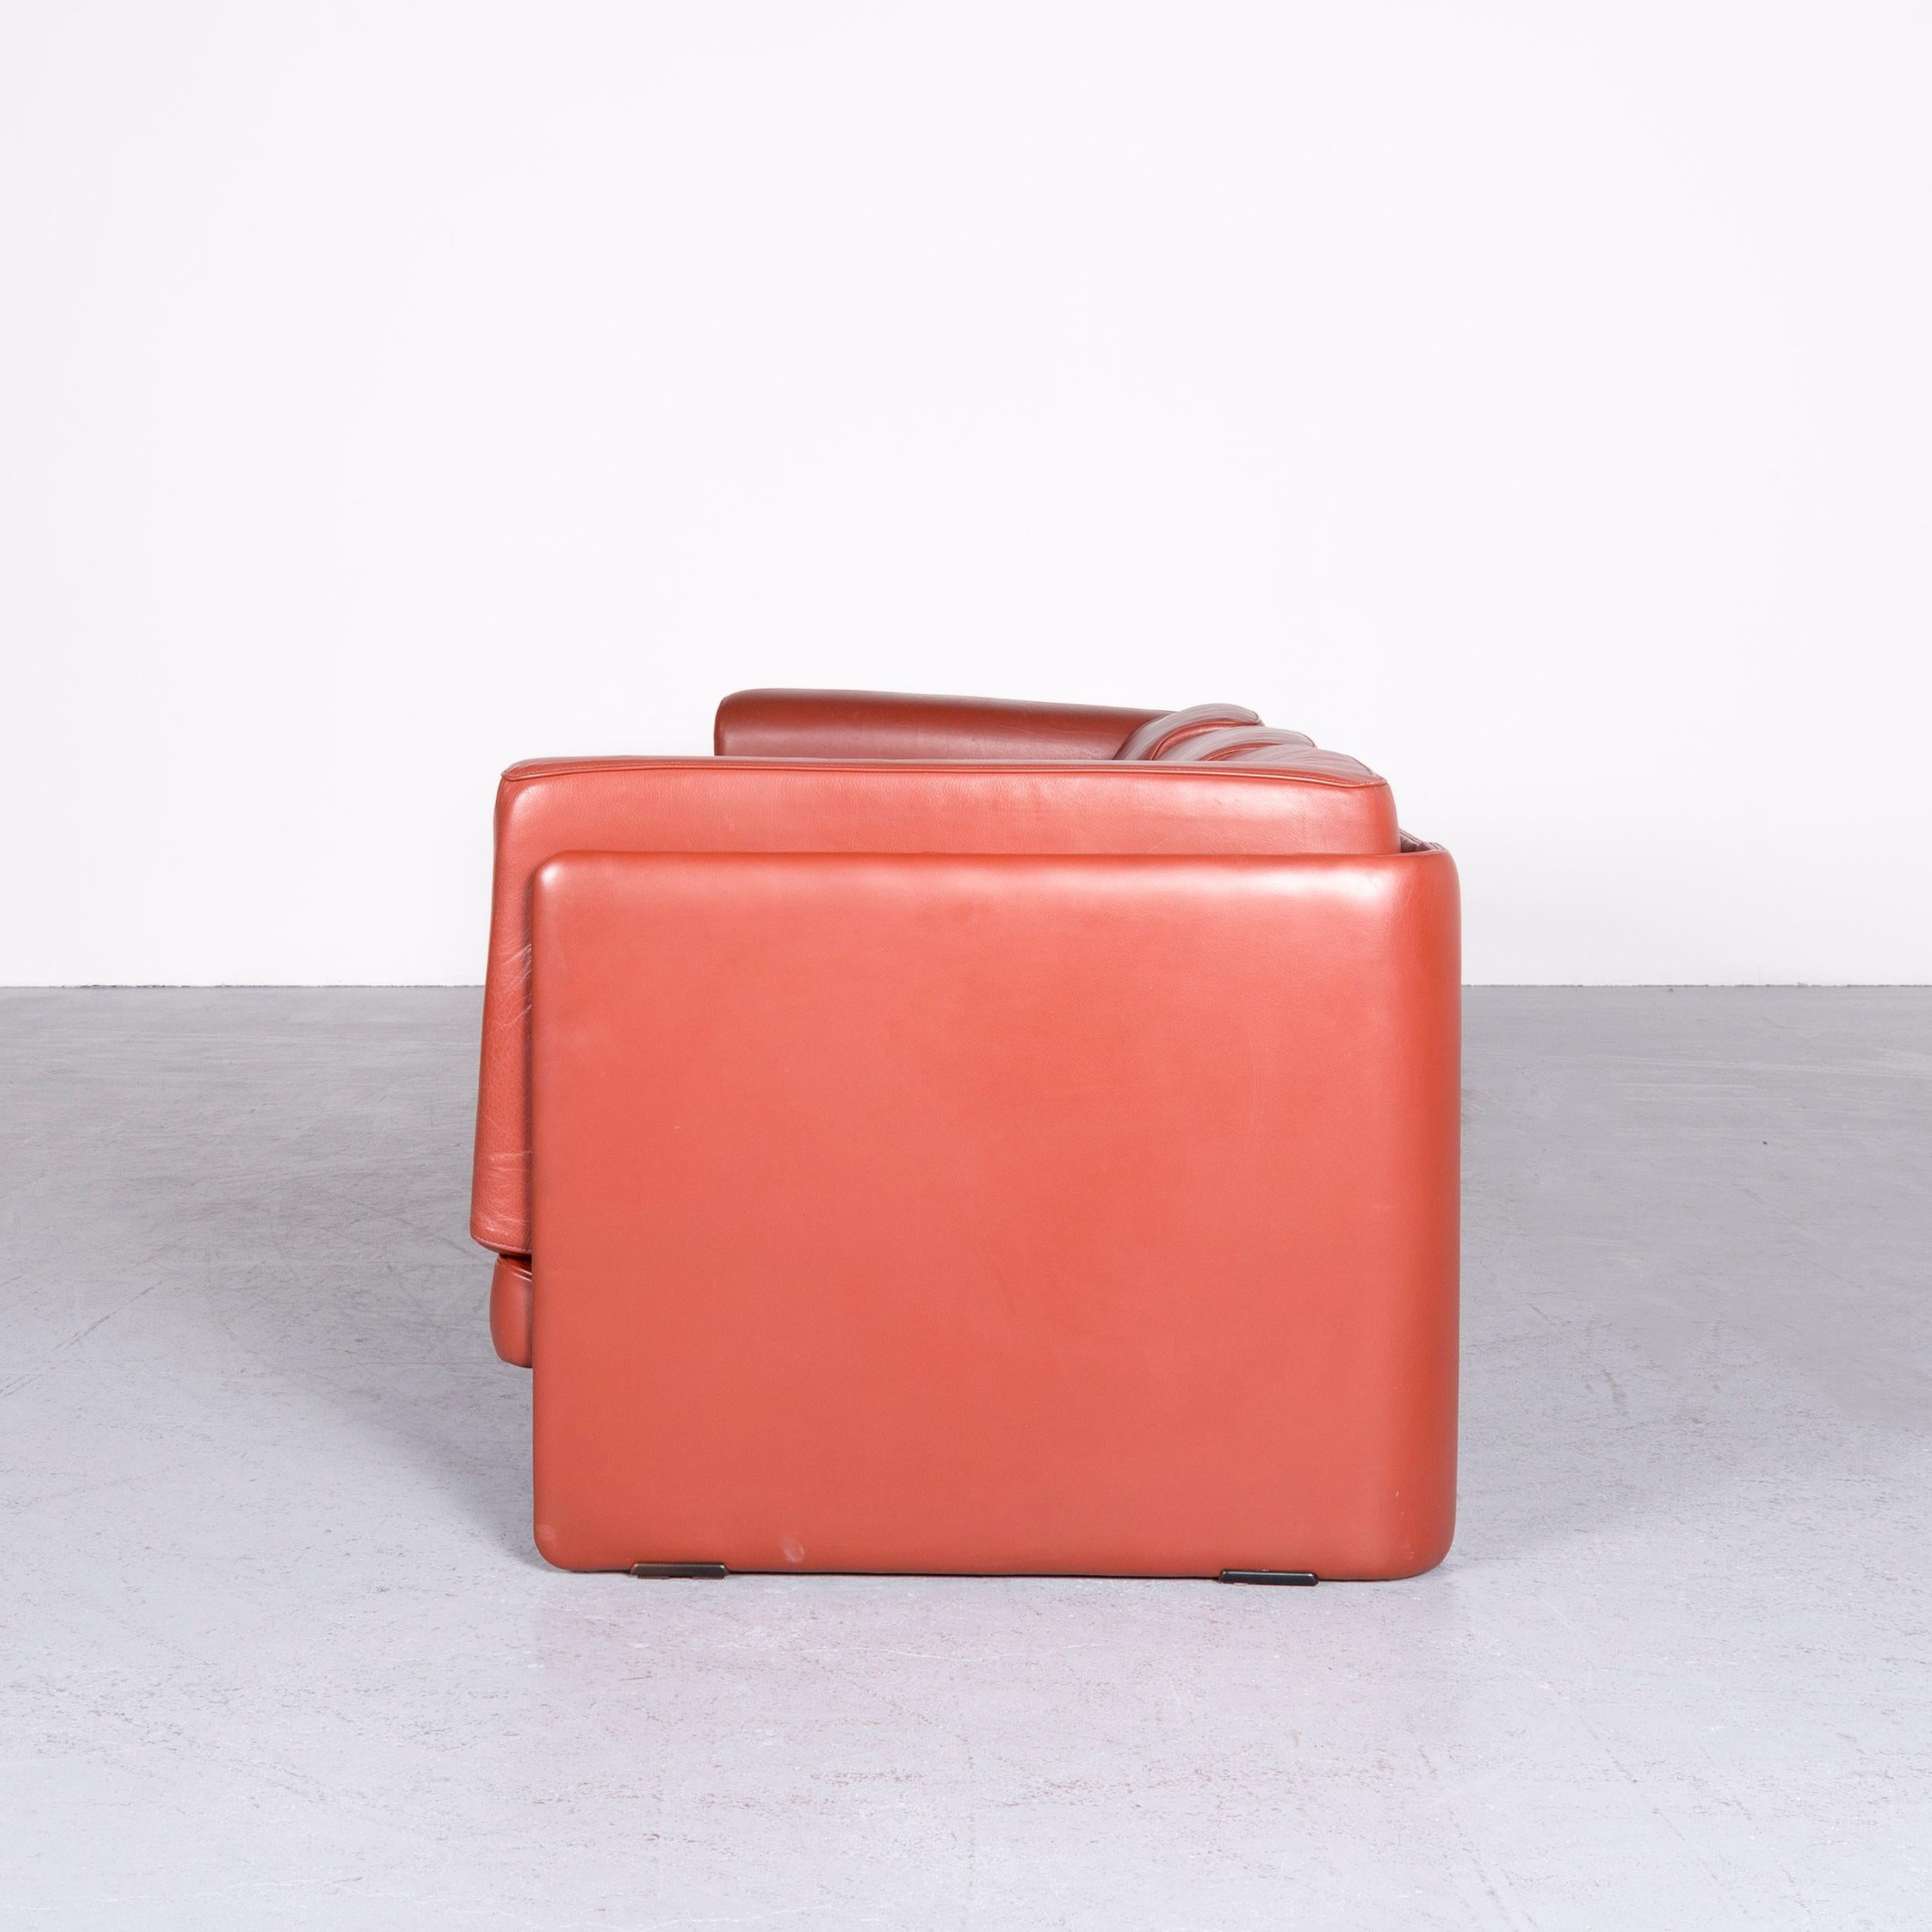 Poltrona Frau Le Chapanelle Designer Leather Sofa Orange by Tito Agnoli For Sale 7